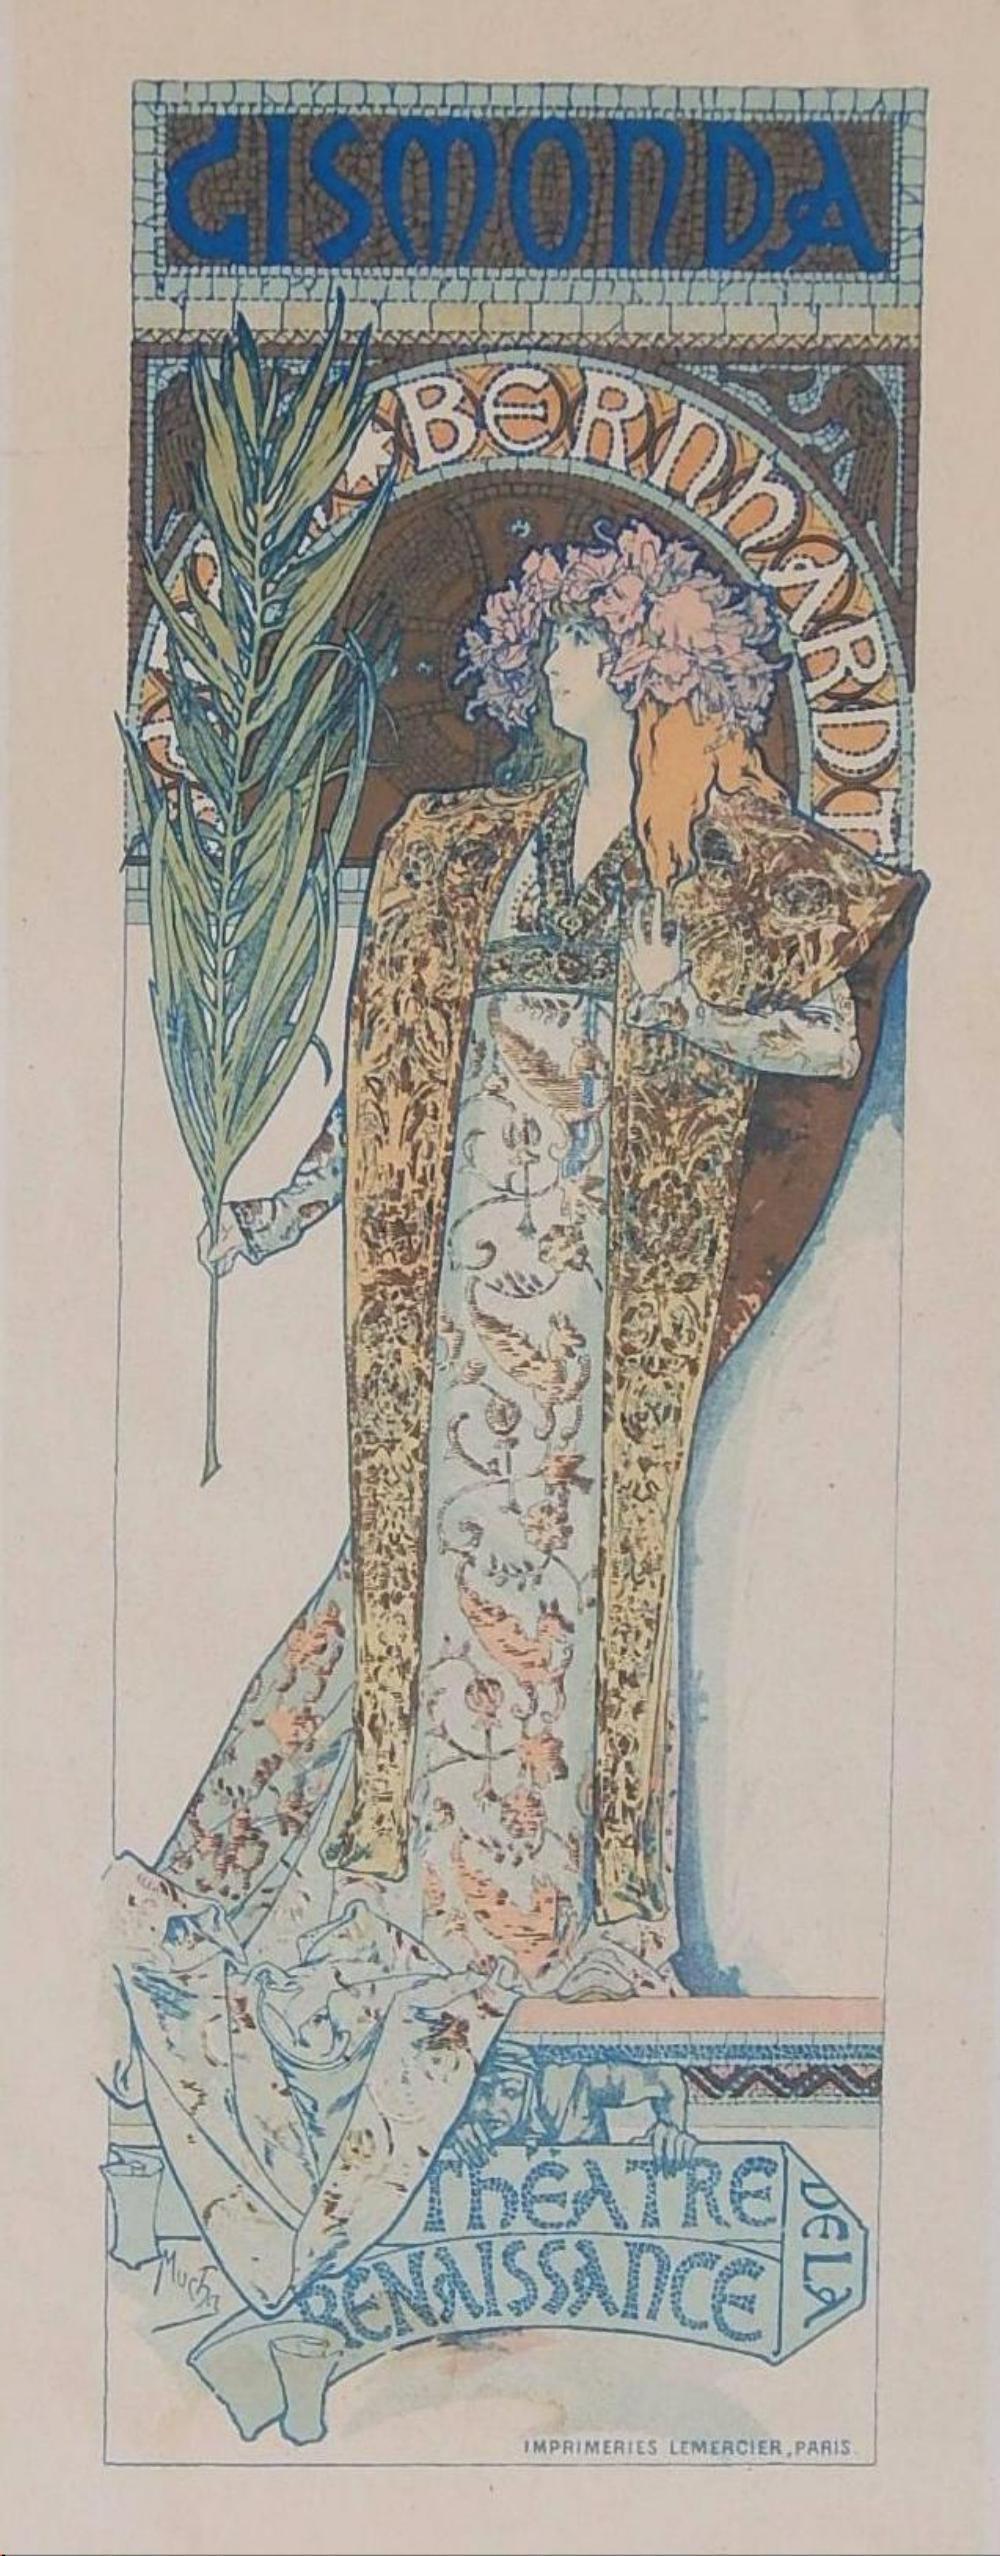 Alphonse Maria Mucha (1860-1939) original color lithograph, 1896.
Titled: “Gismonda.” A Sarah Bernhardt Play Poster. 
Image measures 13